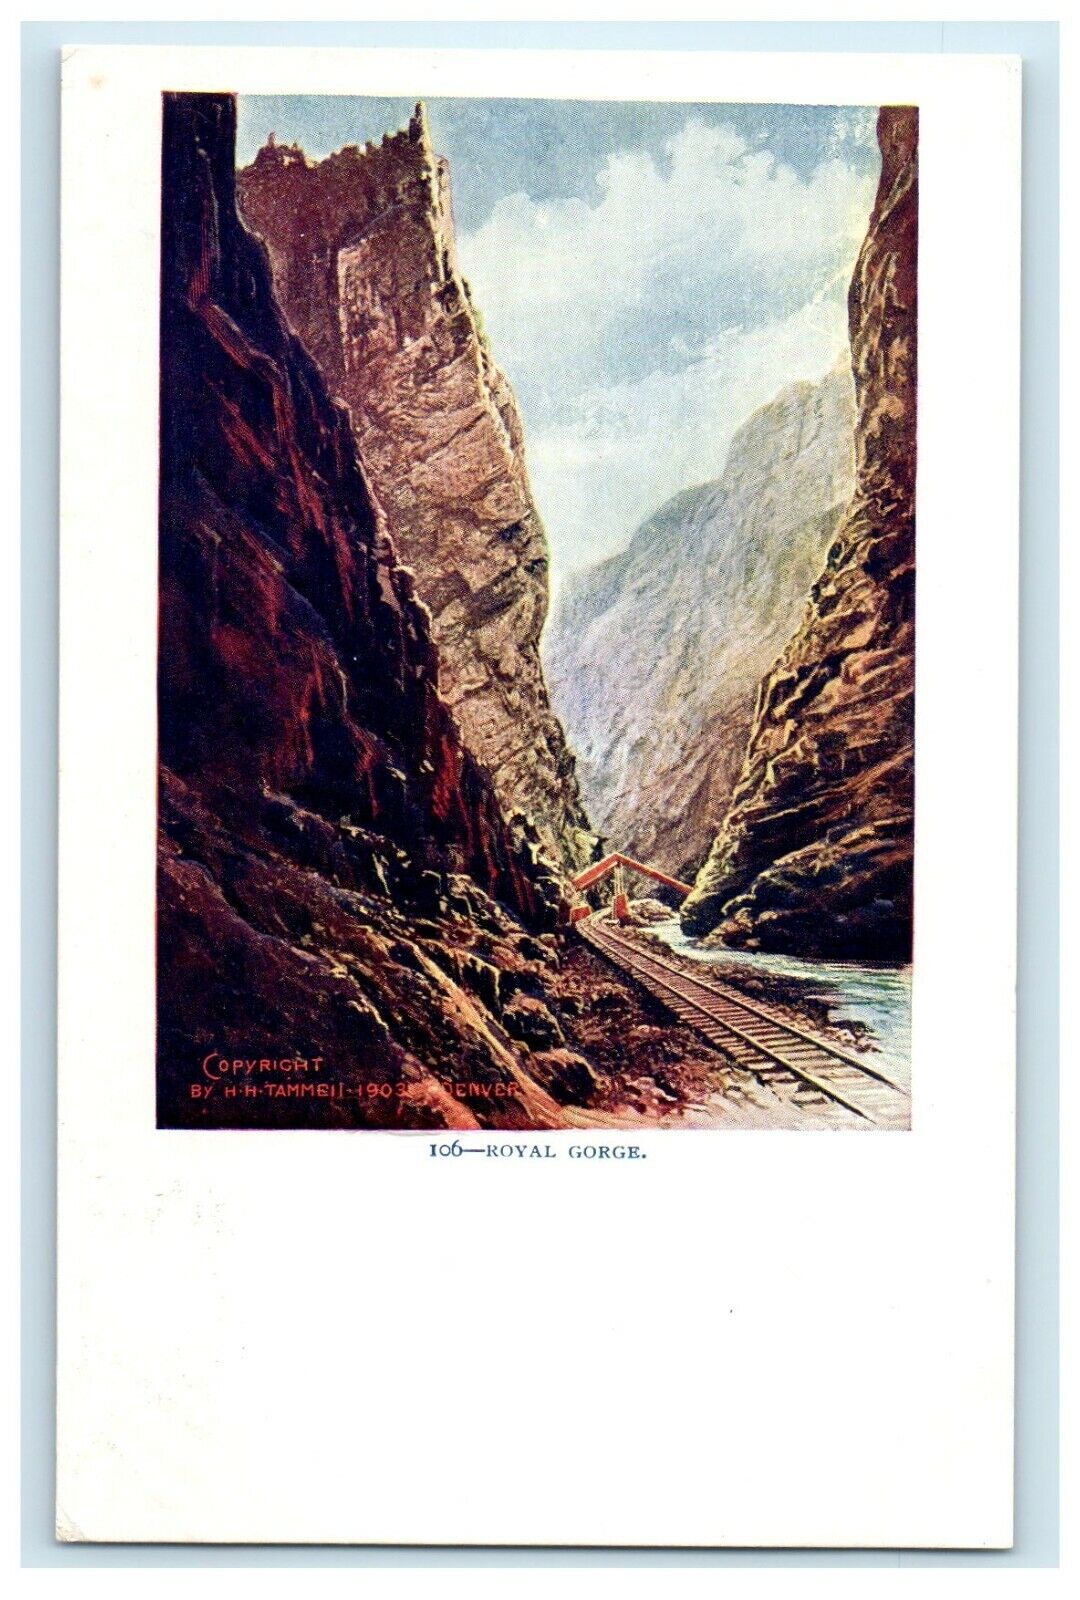 c1905 Royal George H.H. Tammell 1903 Denver Colorado CO Antique Postcard